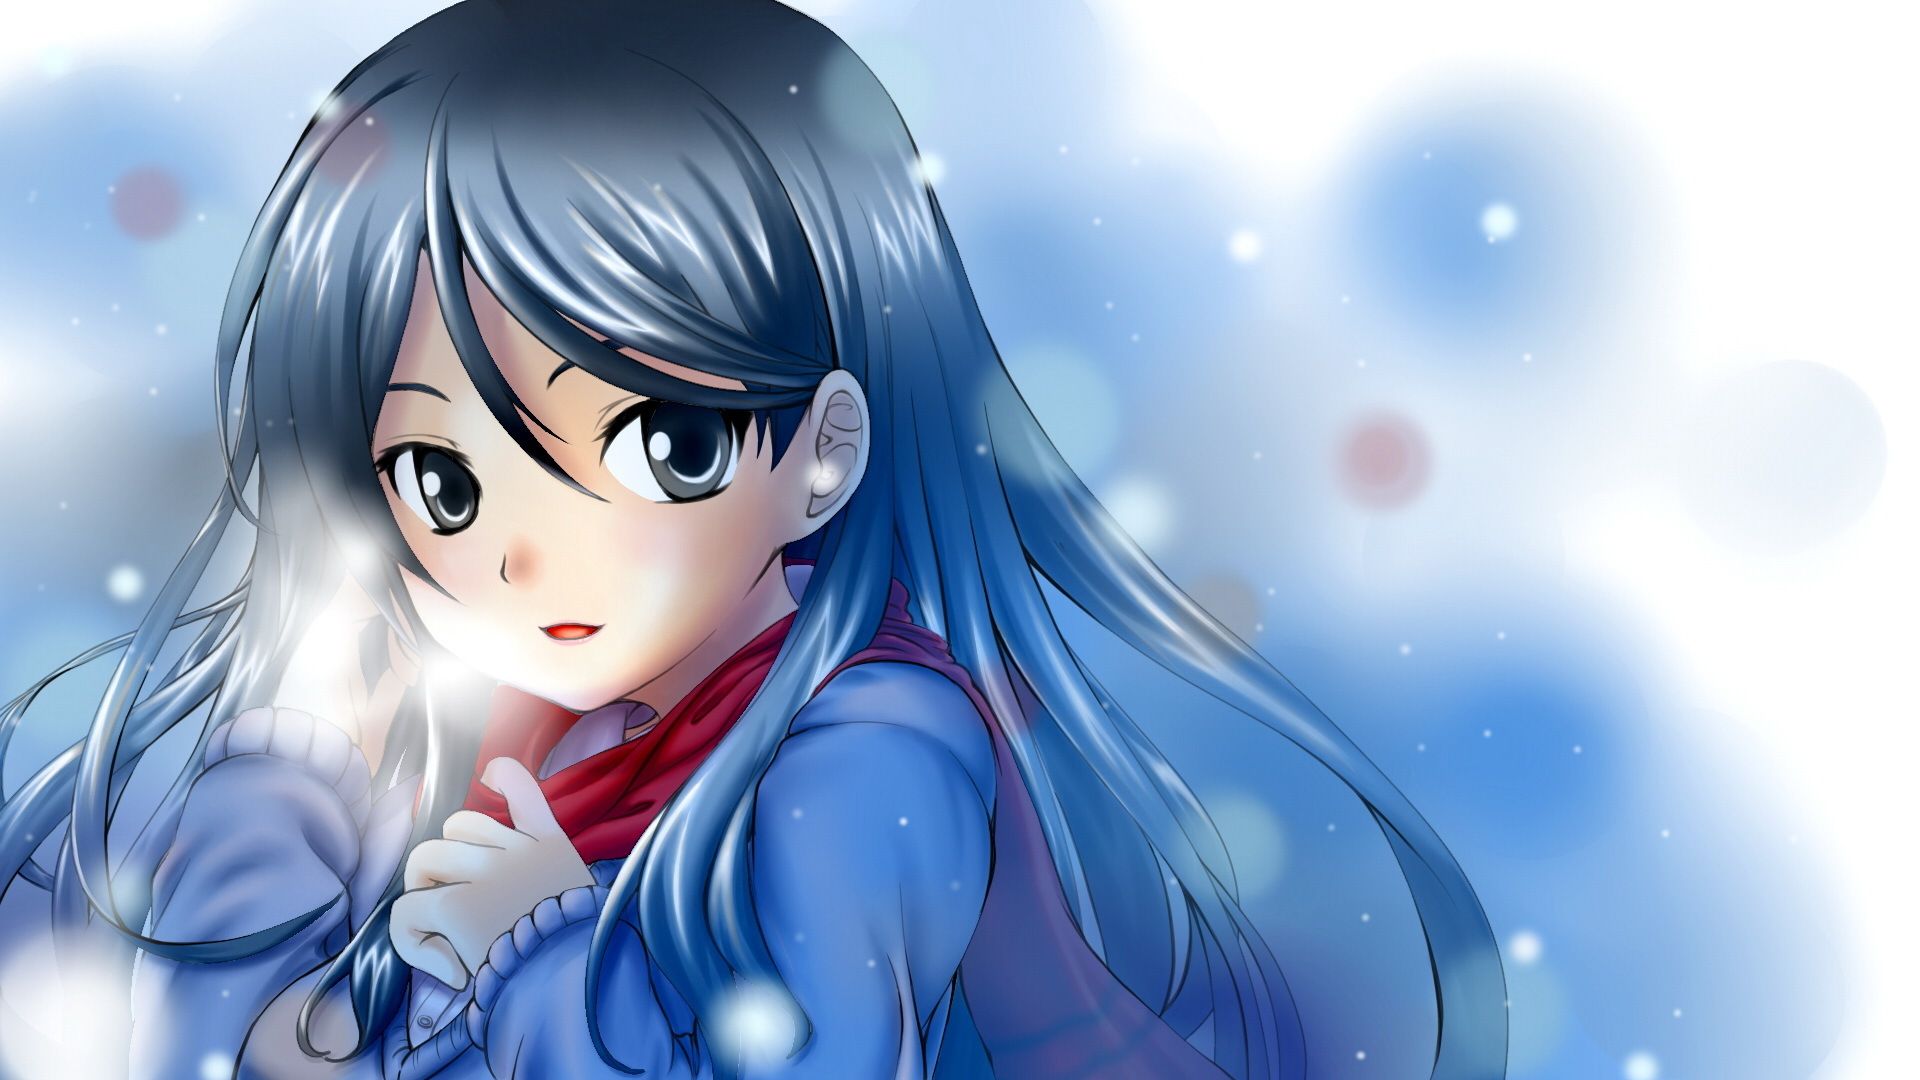 Cute Anime Girl HD 6298 1920 x 1080